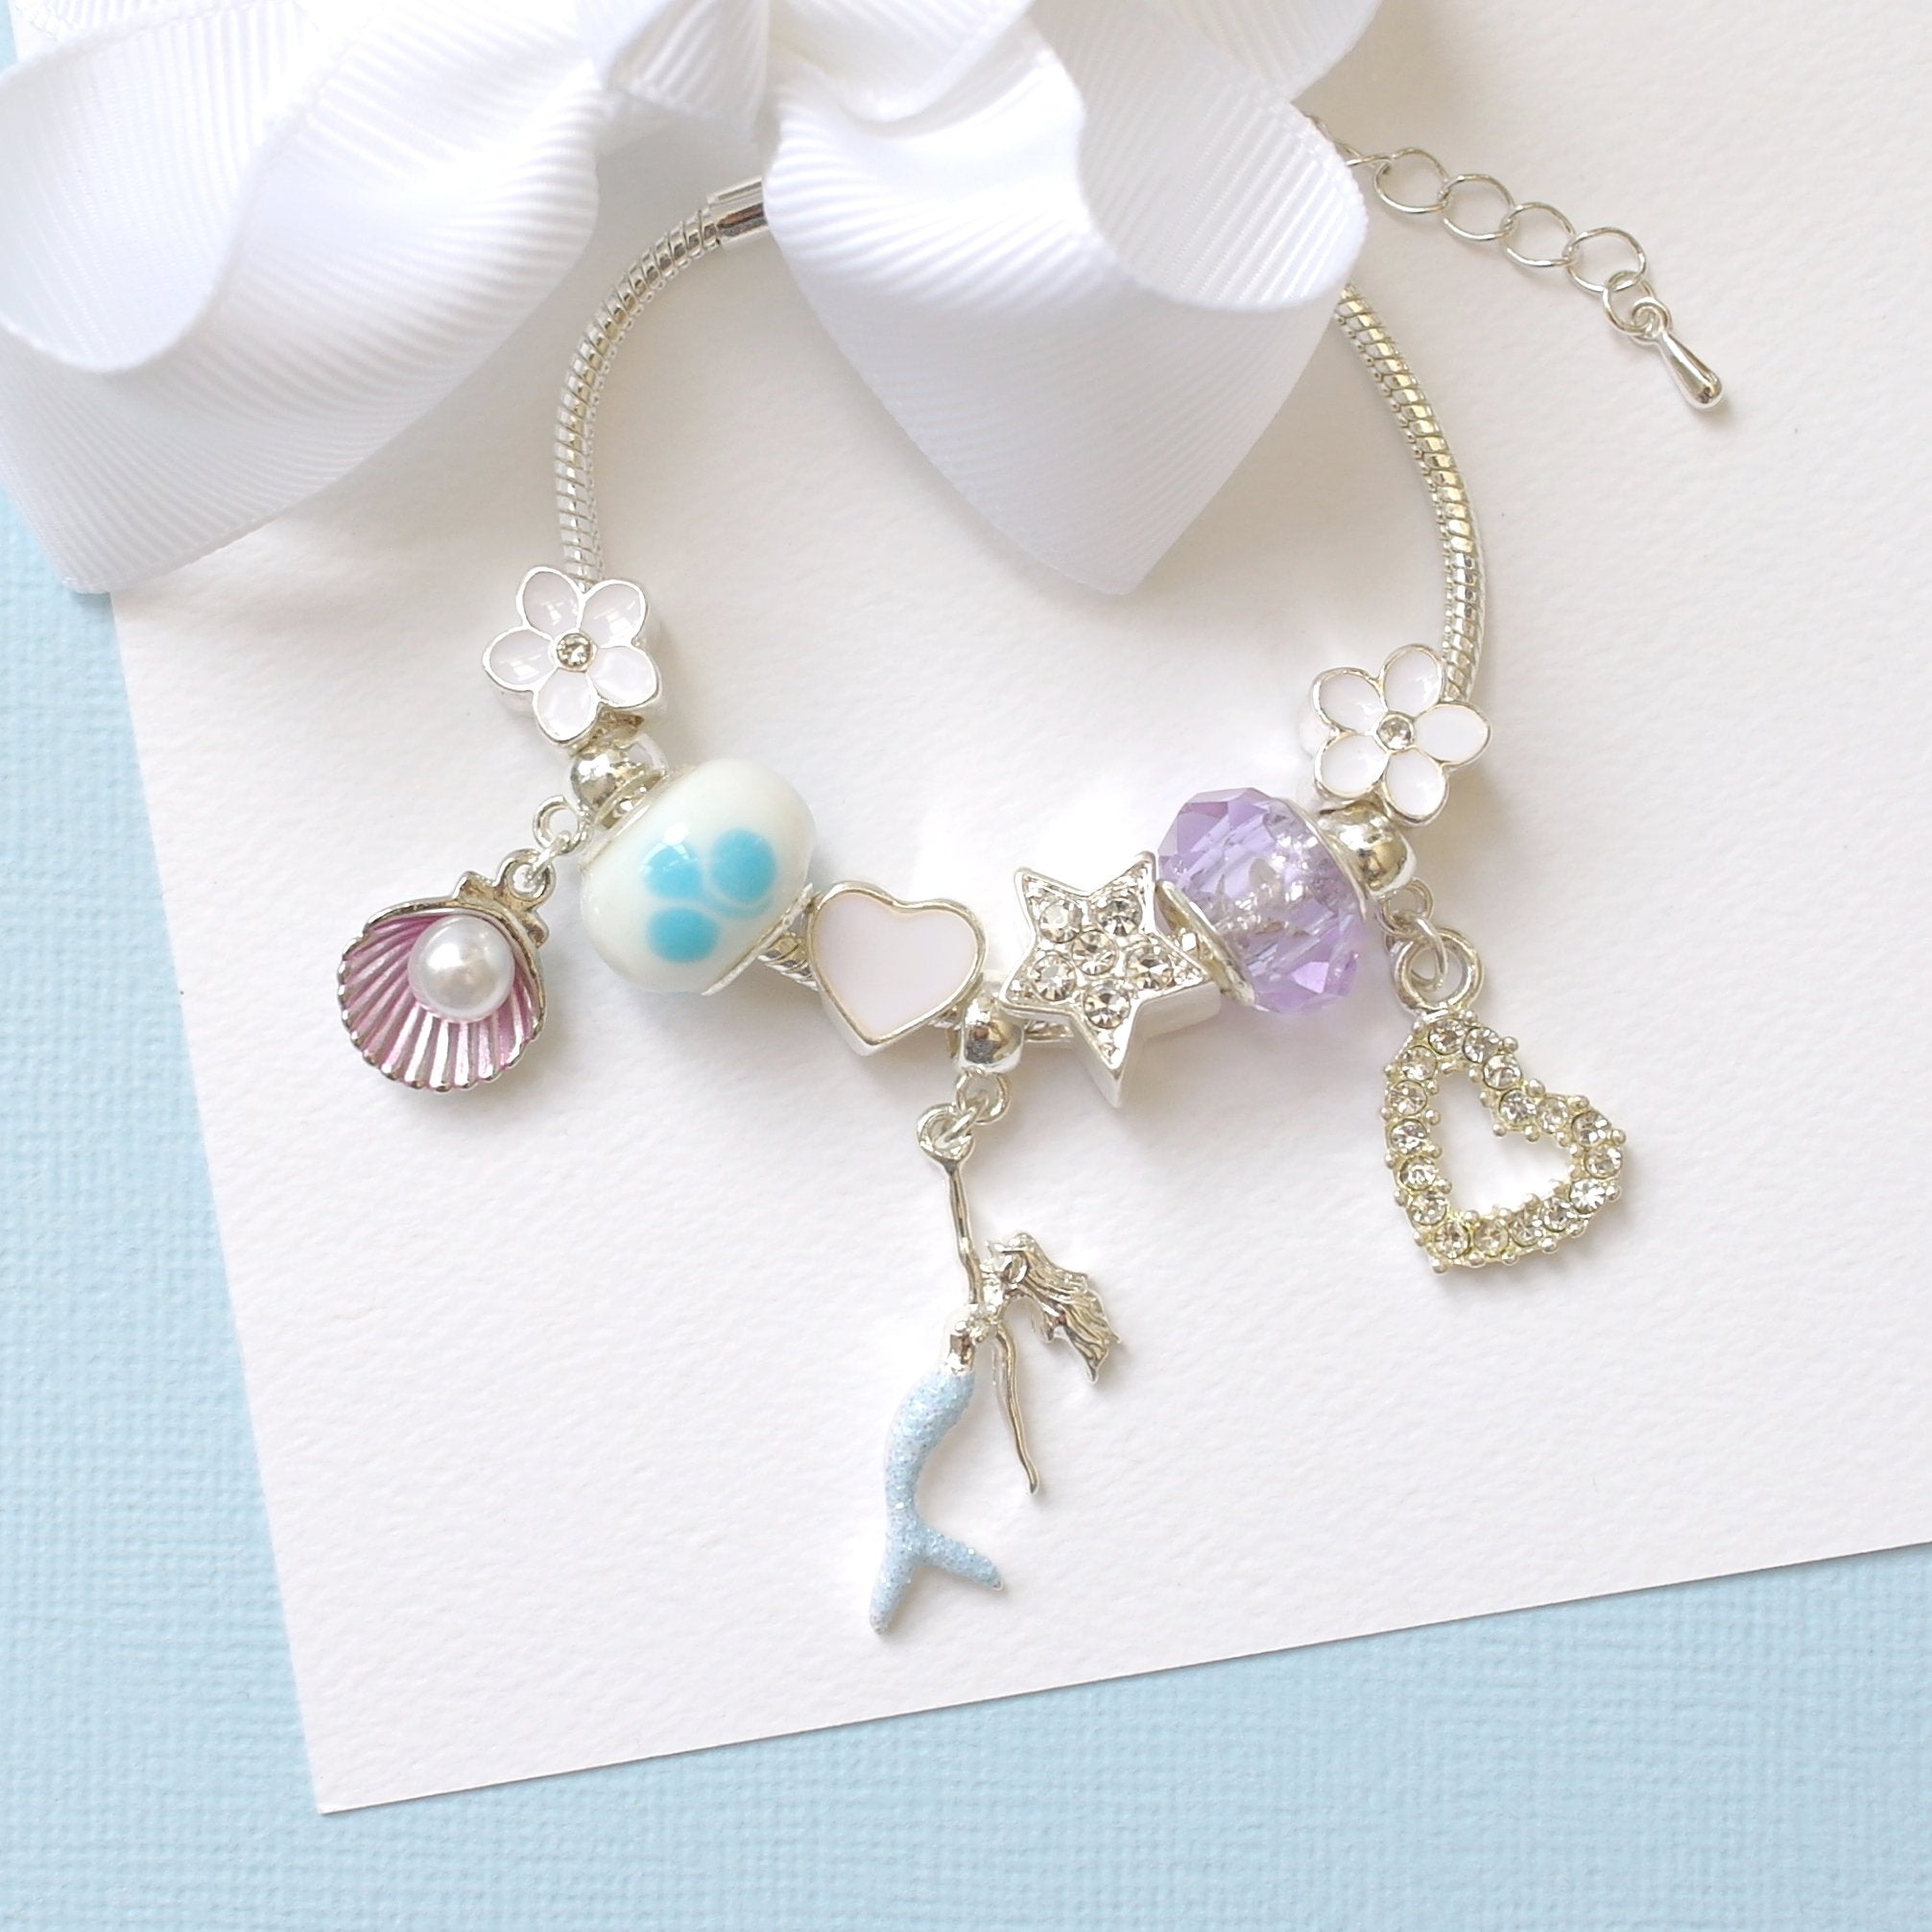 sterling silver mermaid bracelet. – Johnny jeweler st.croix